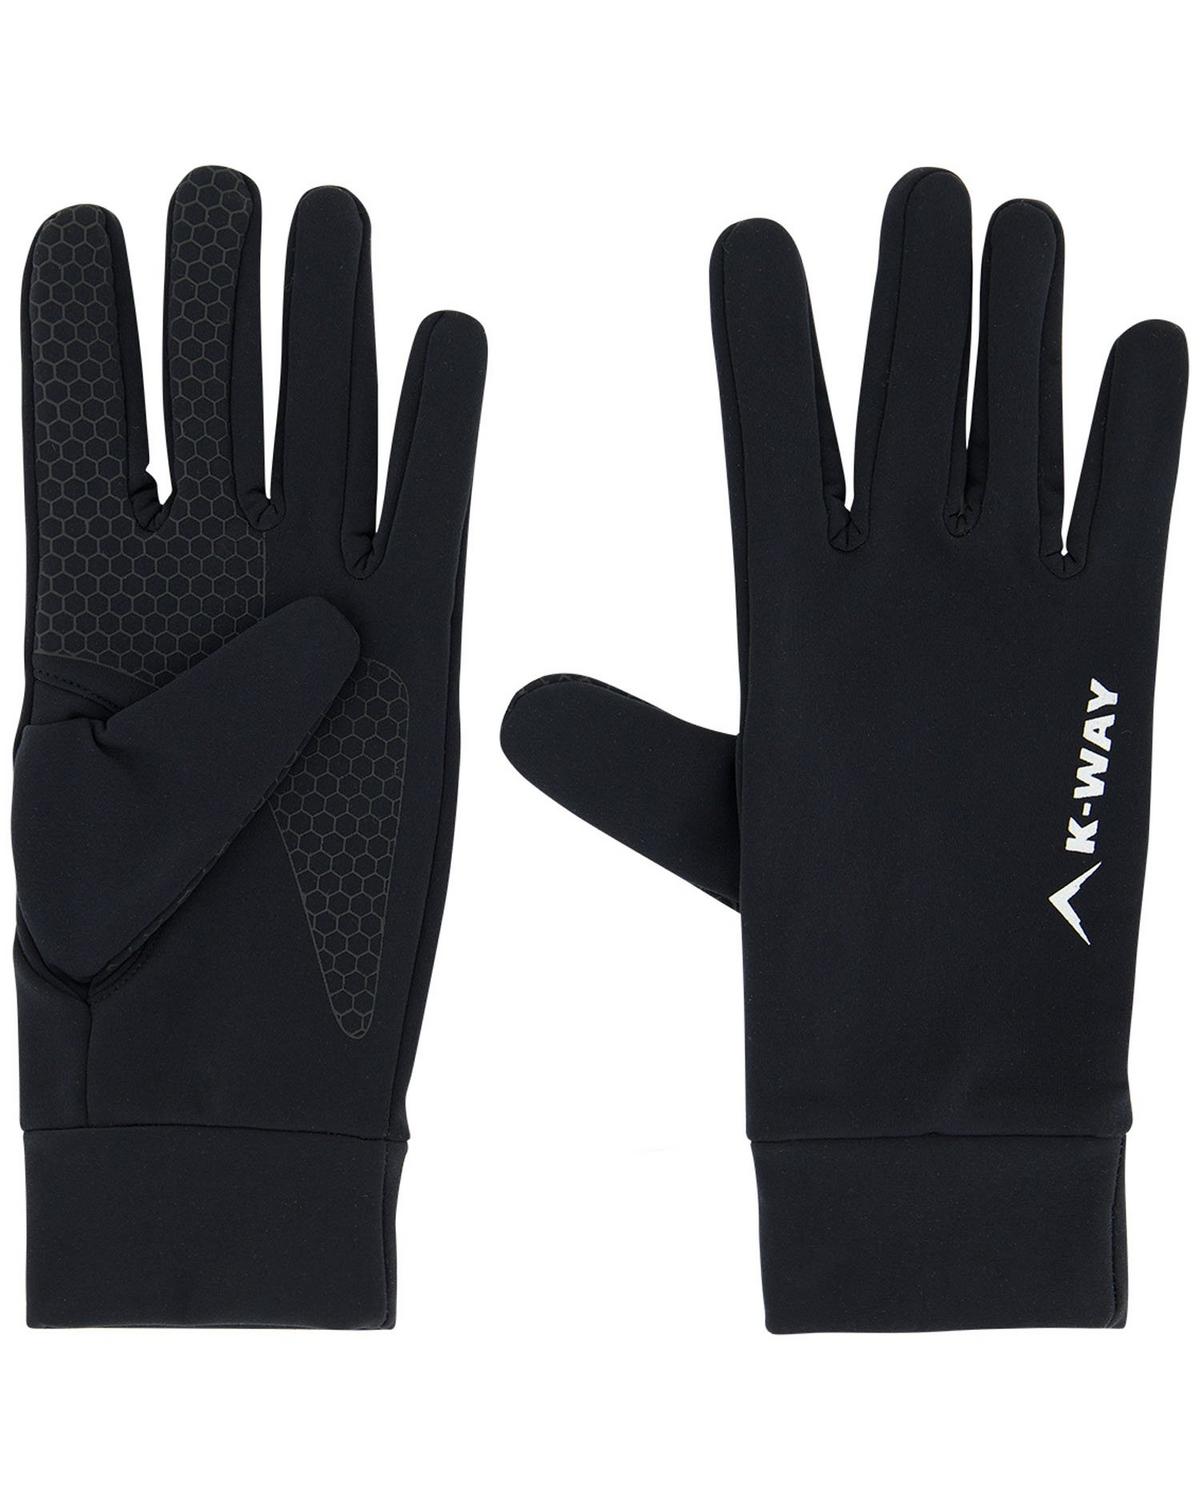 K-Way Bolt Touch Gloves -  Black